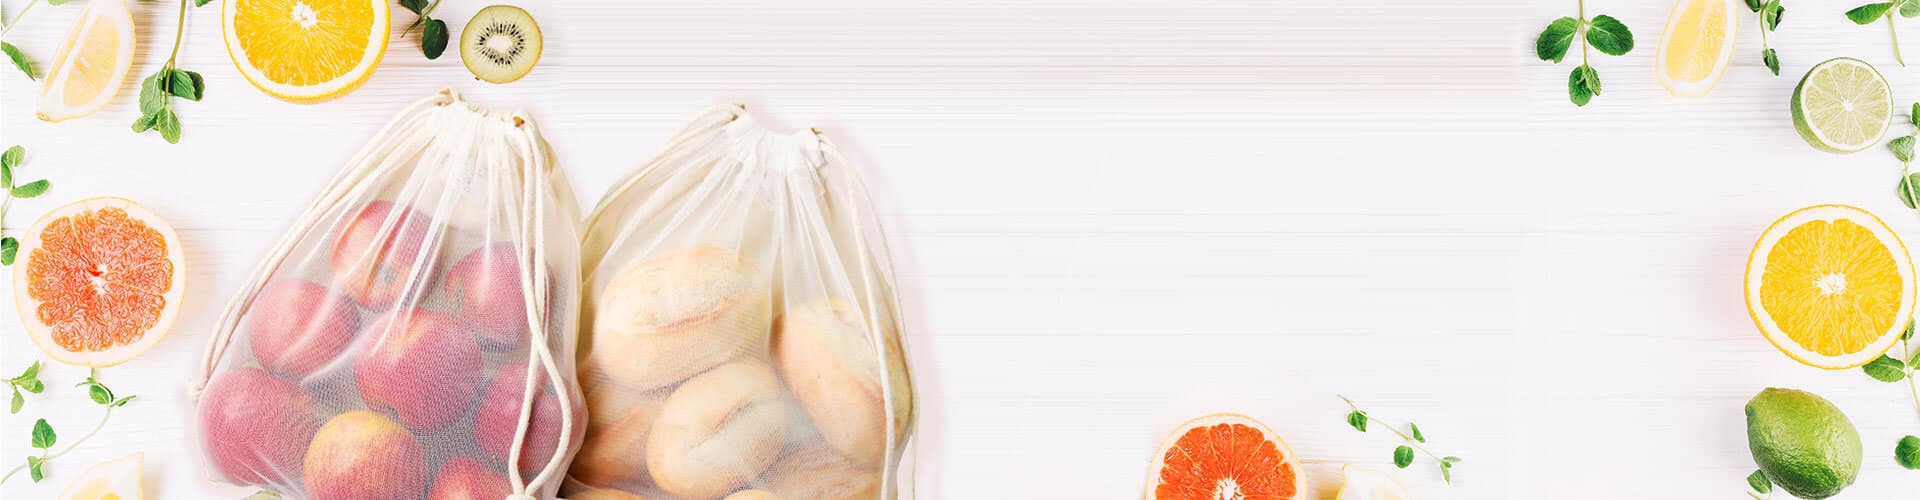 Mister Bags | Obst- und Gemüsebeutel | Food Bags & Veggiebags